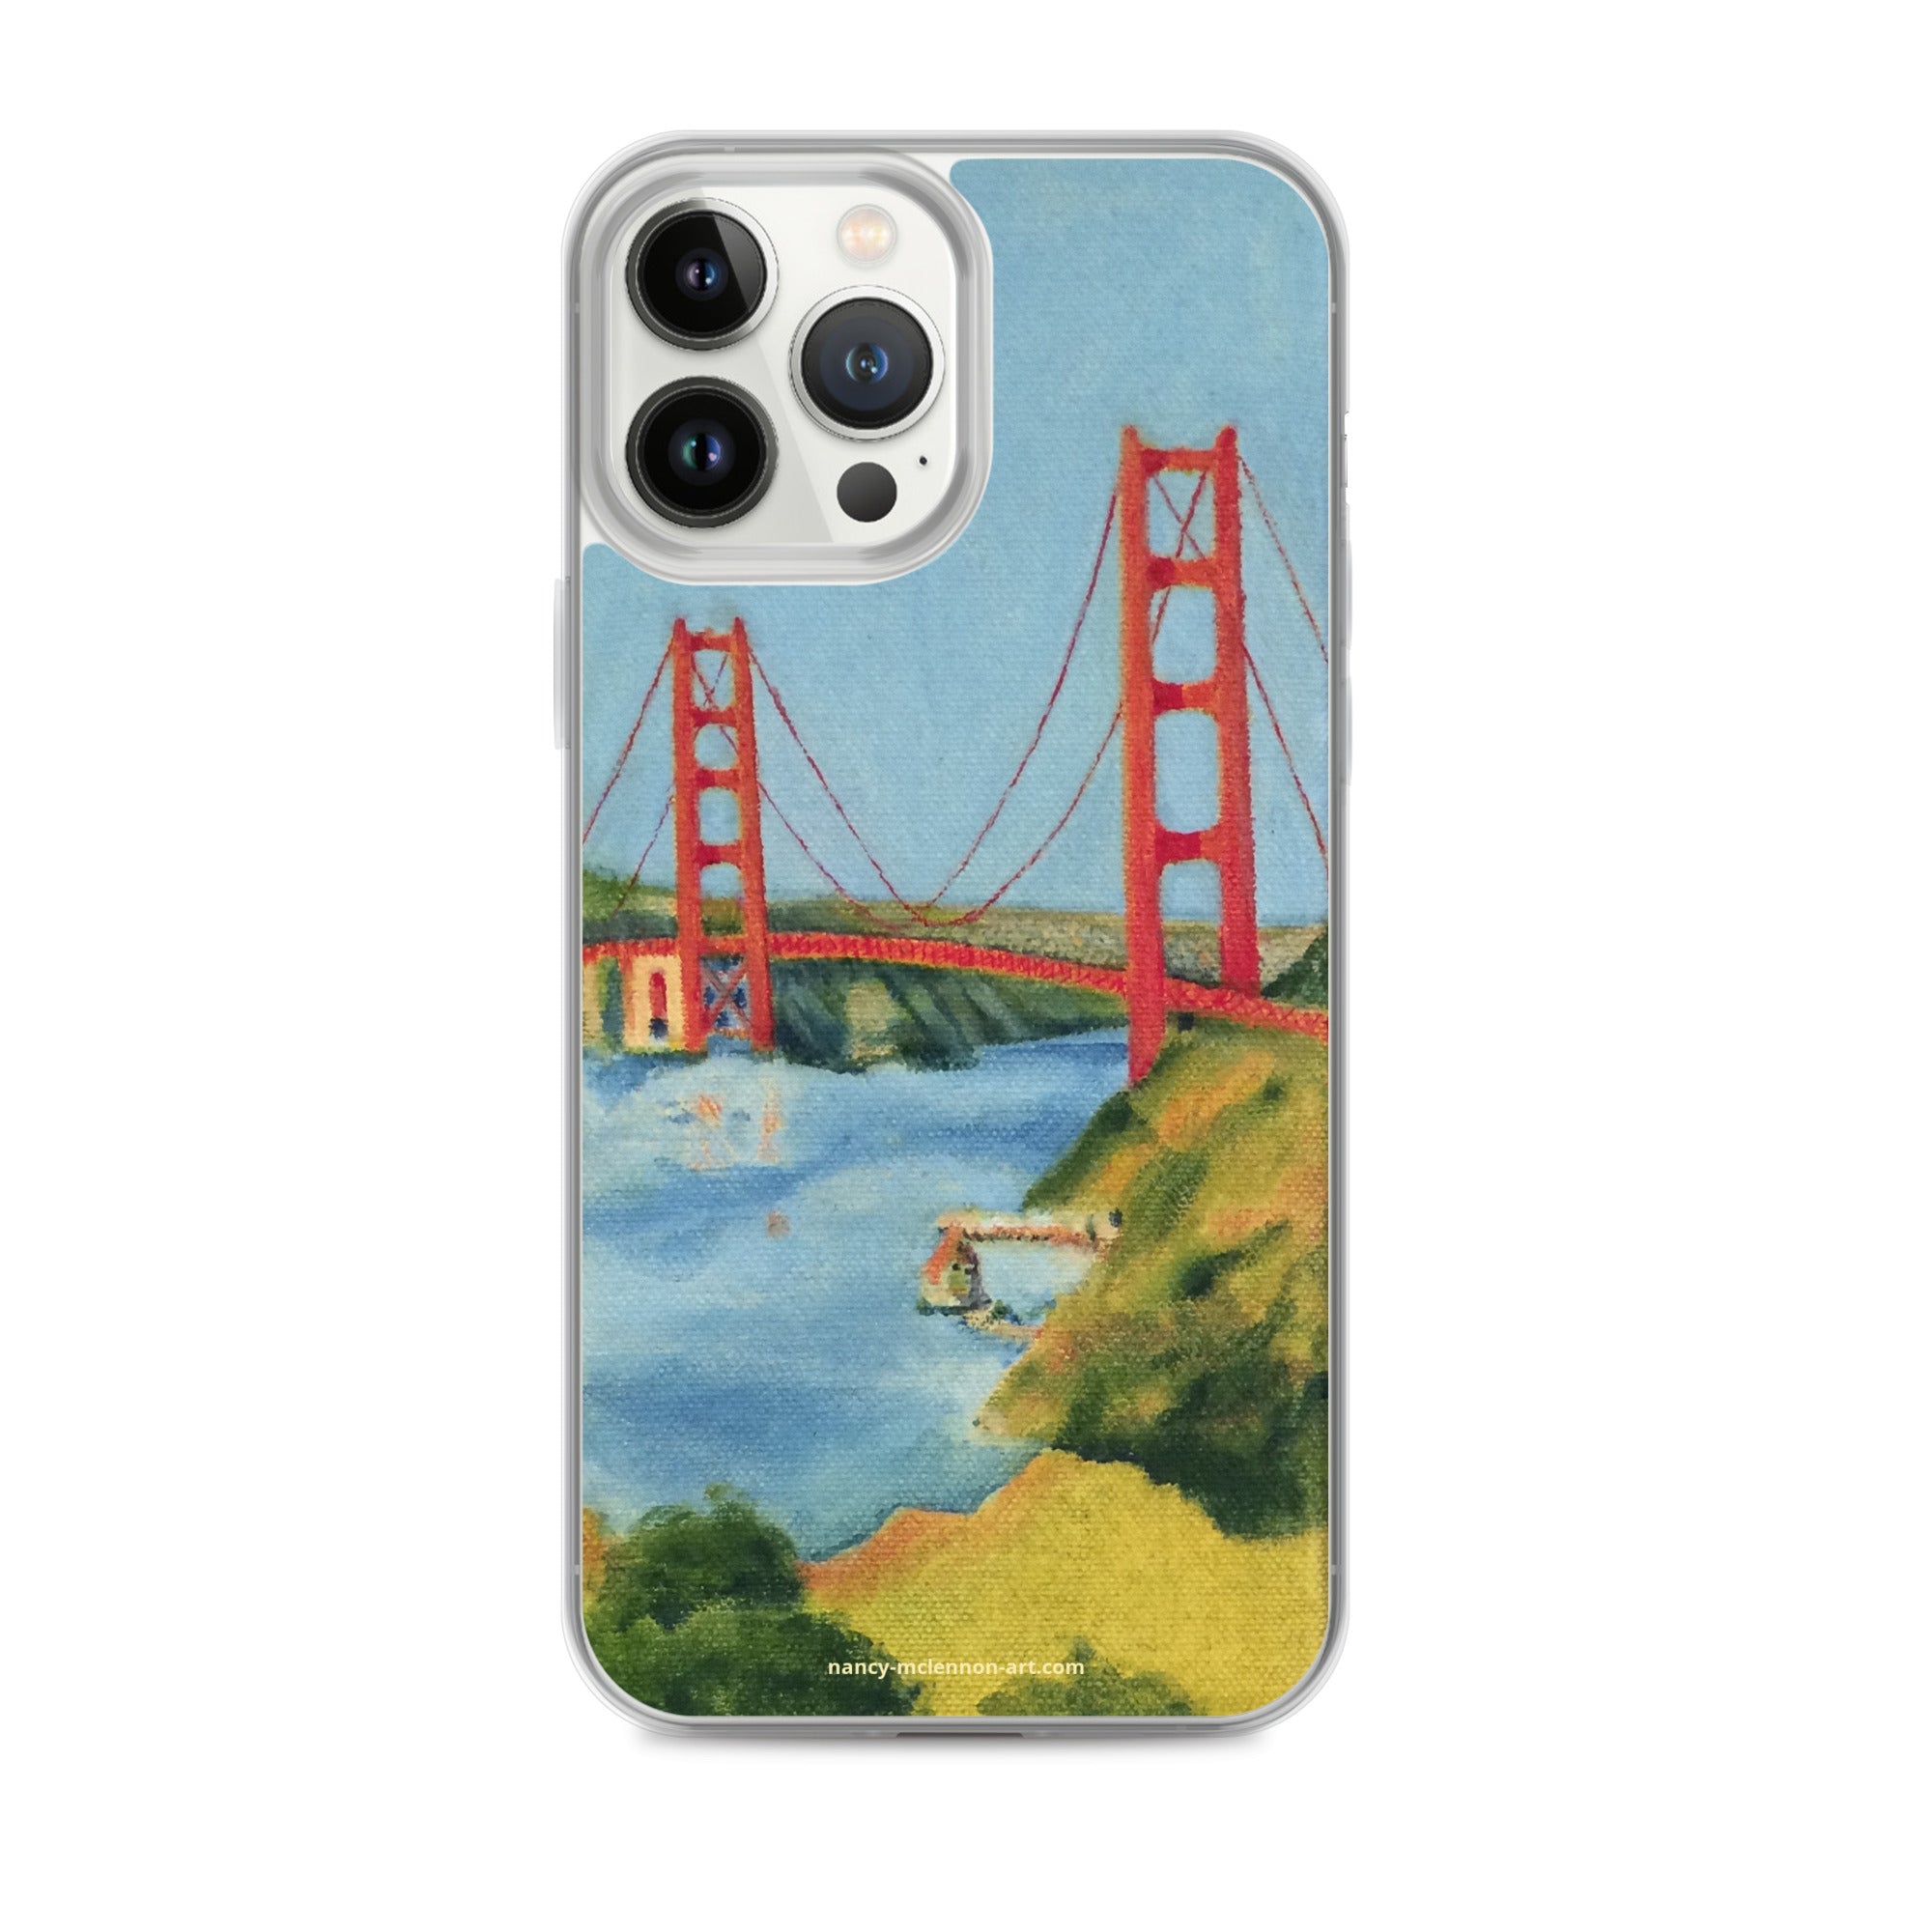 iPhone® Case - Golden Gate Bridge from Marin